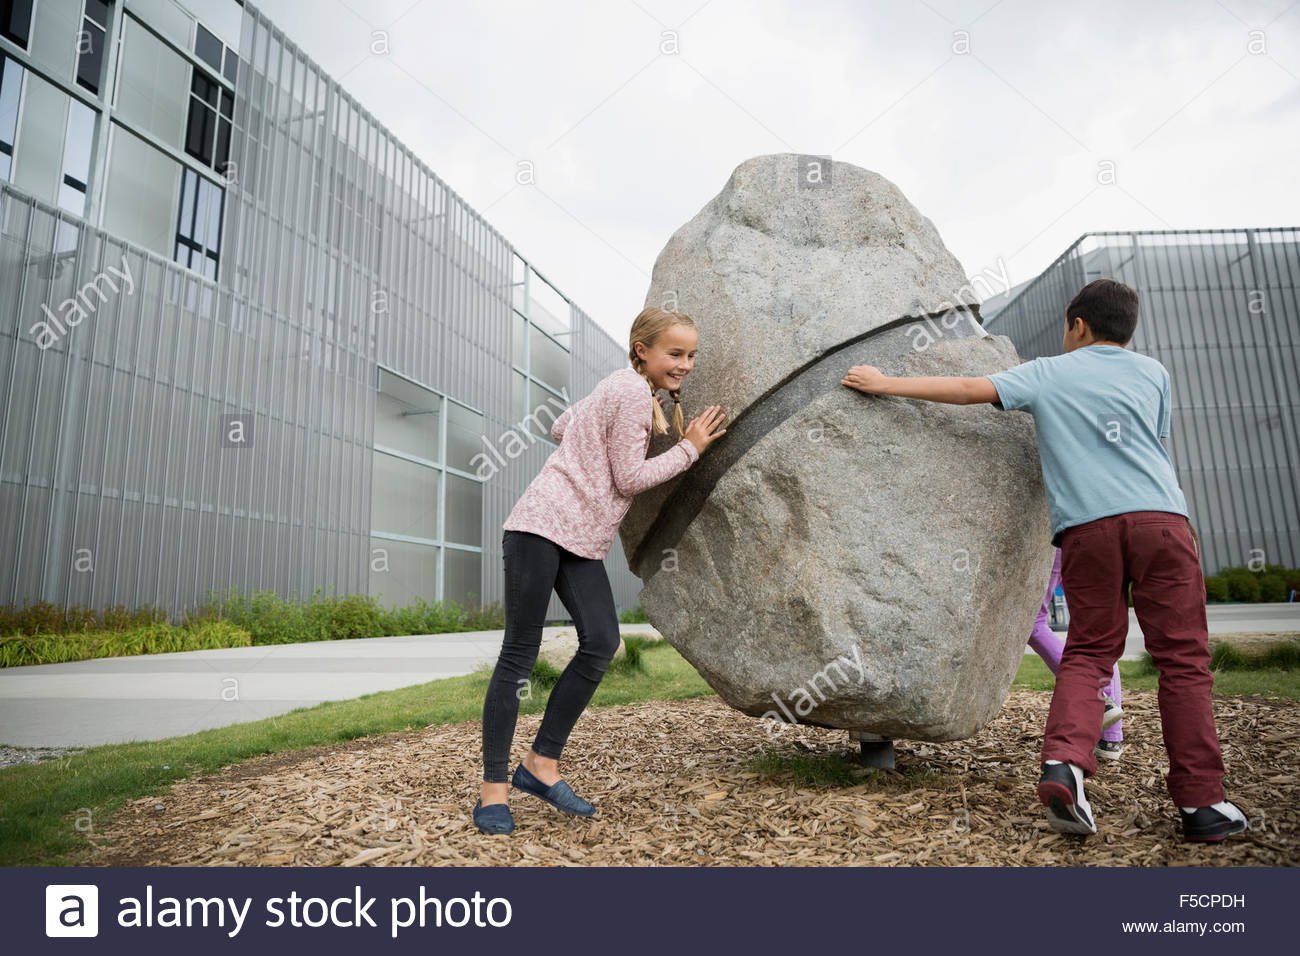 Boy and girl circling large boulder at playground Stock Photo